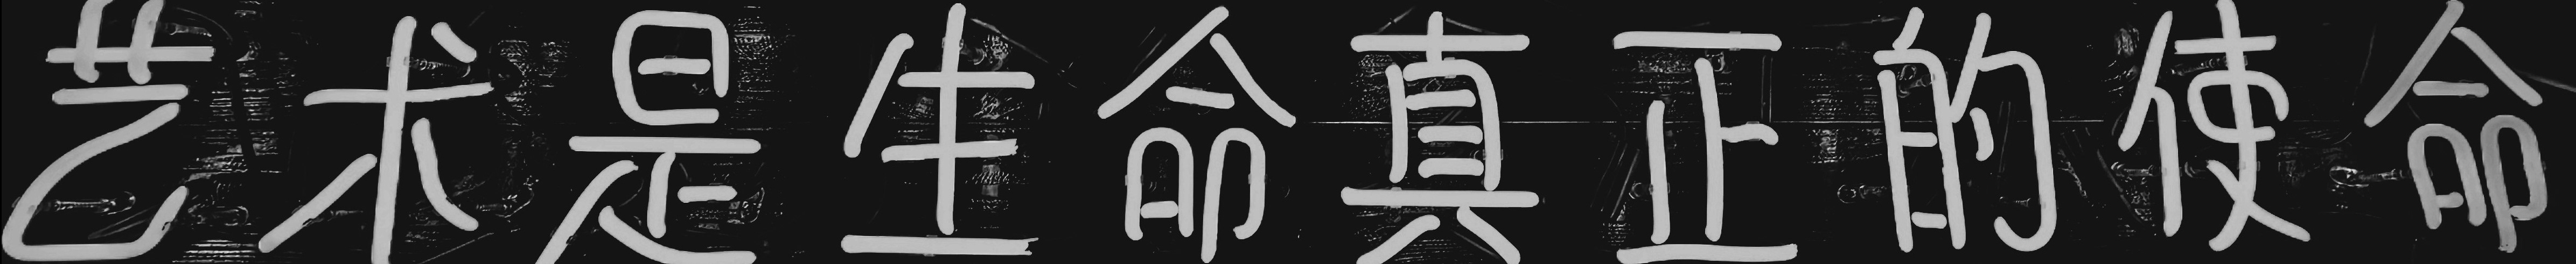 Profil-Banner von Xi Huang